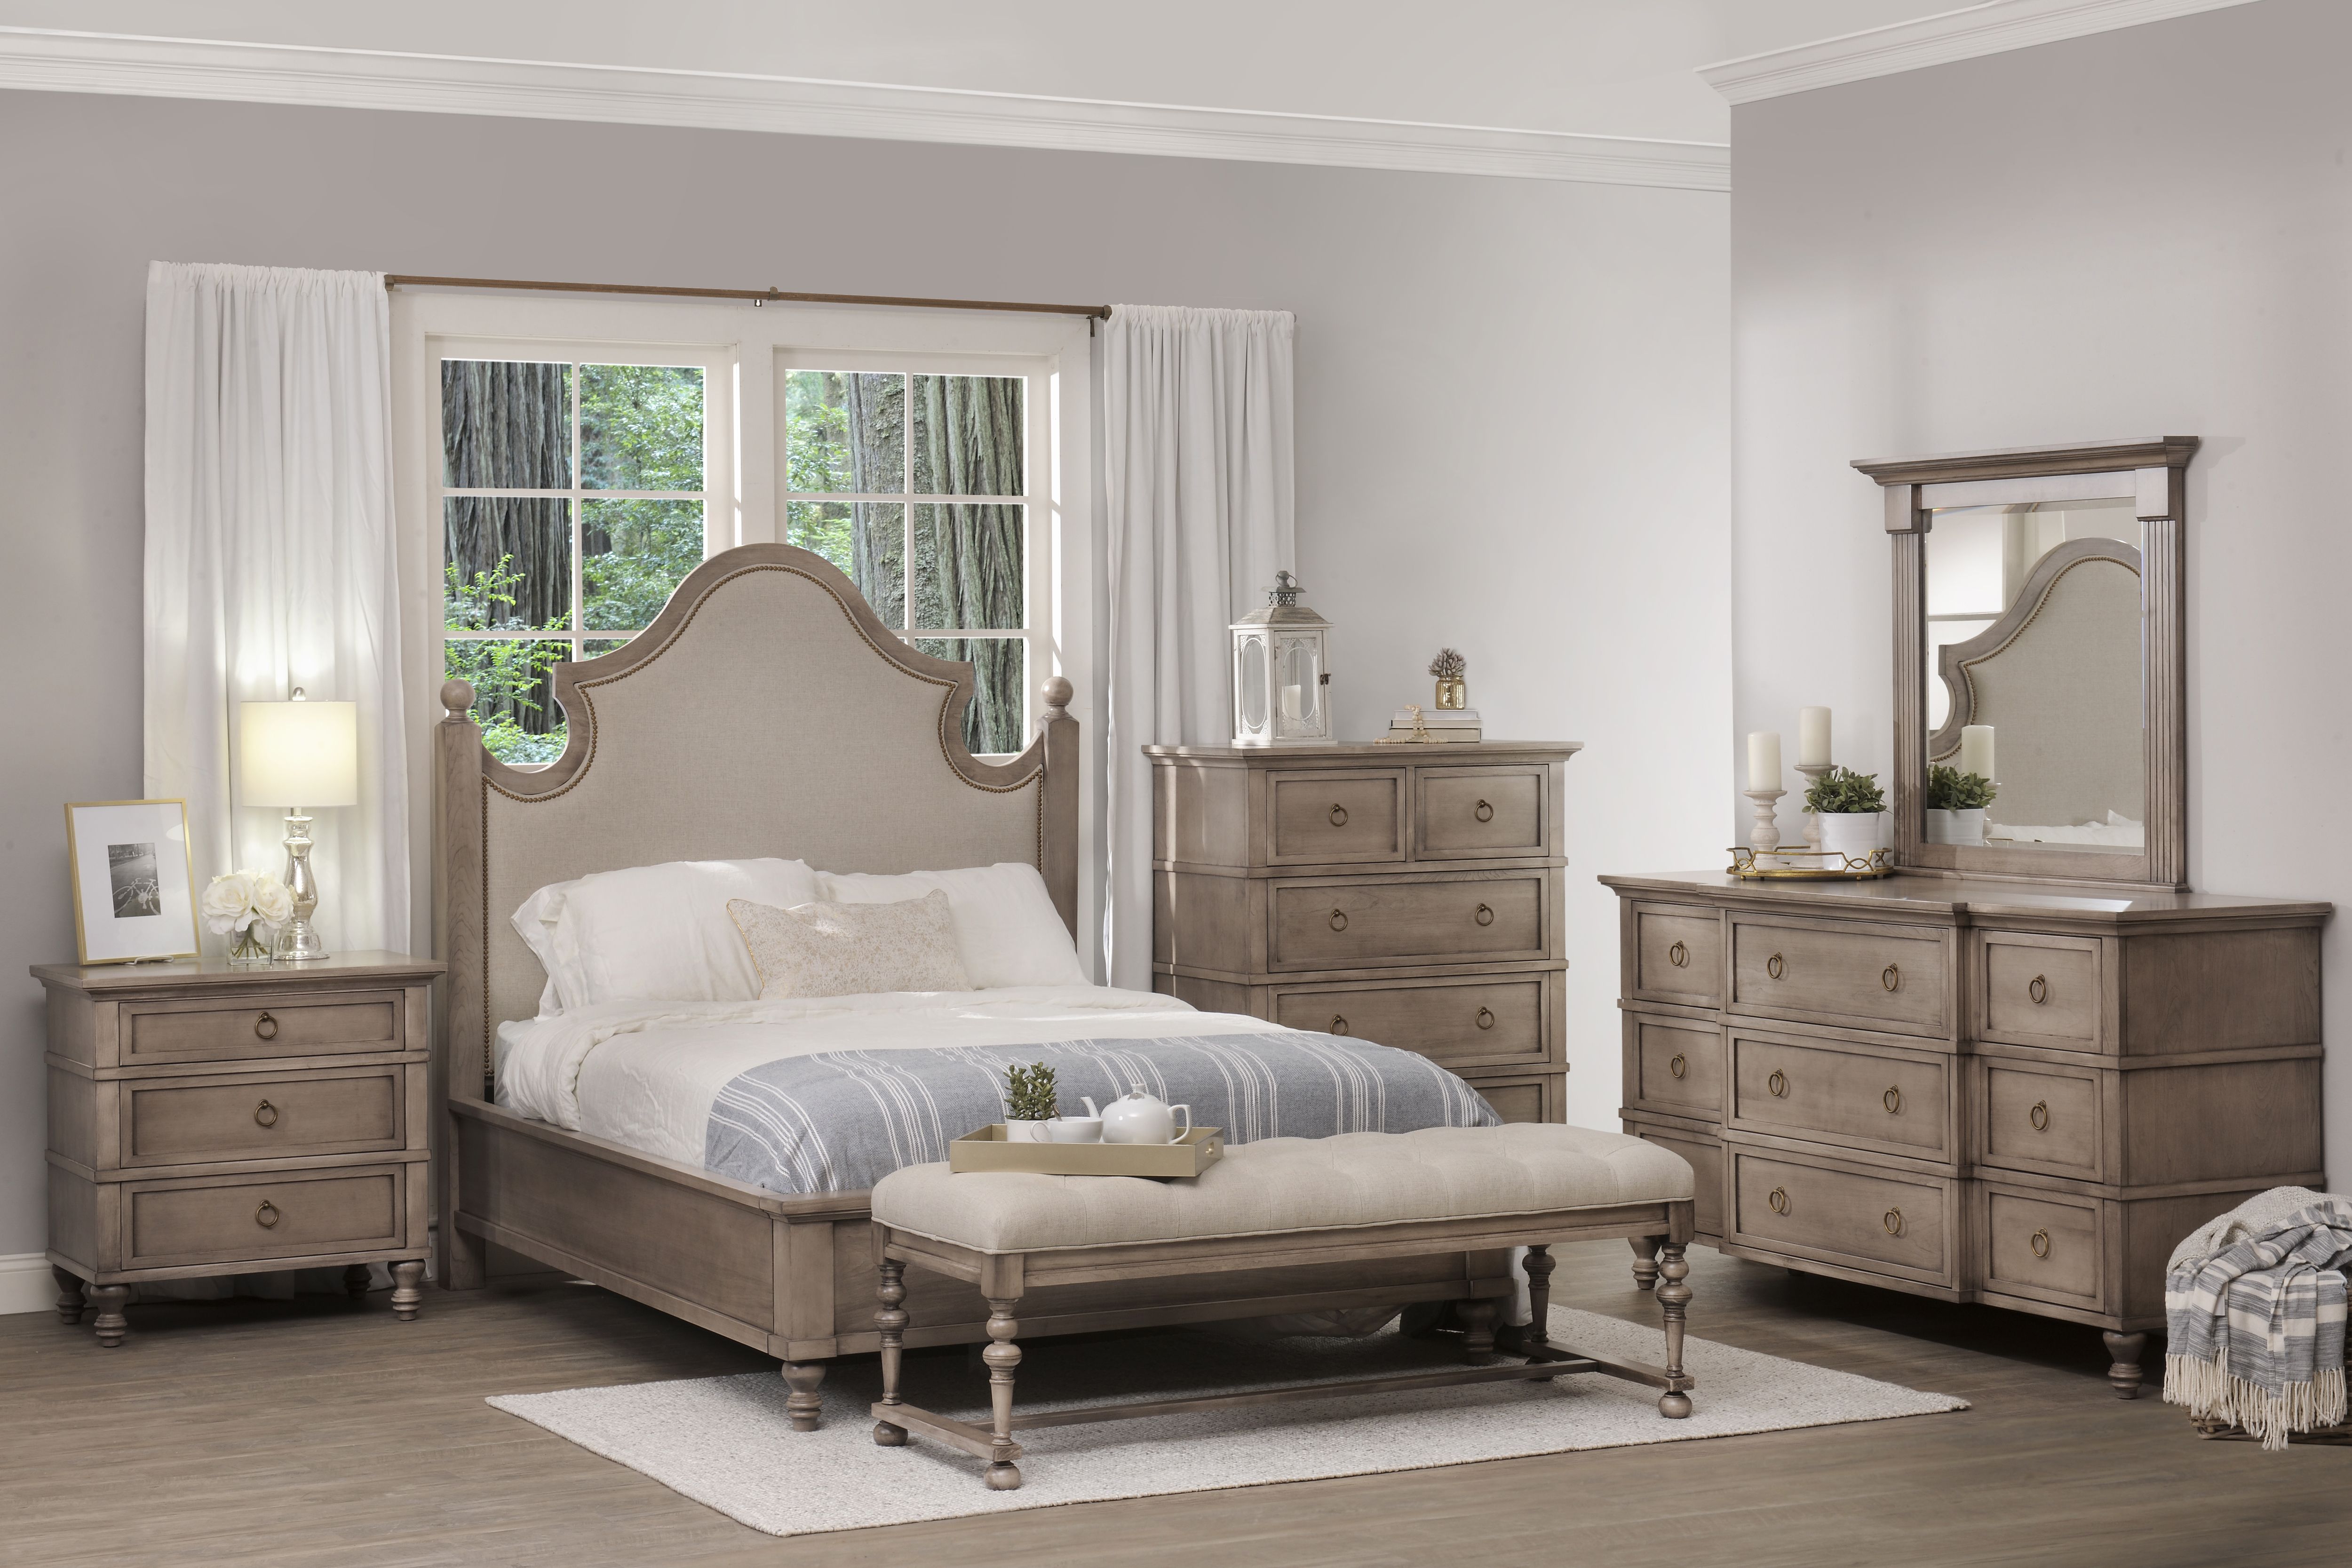 custom made bedroom furniture sydney